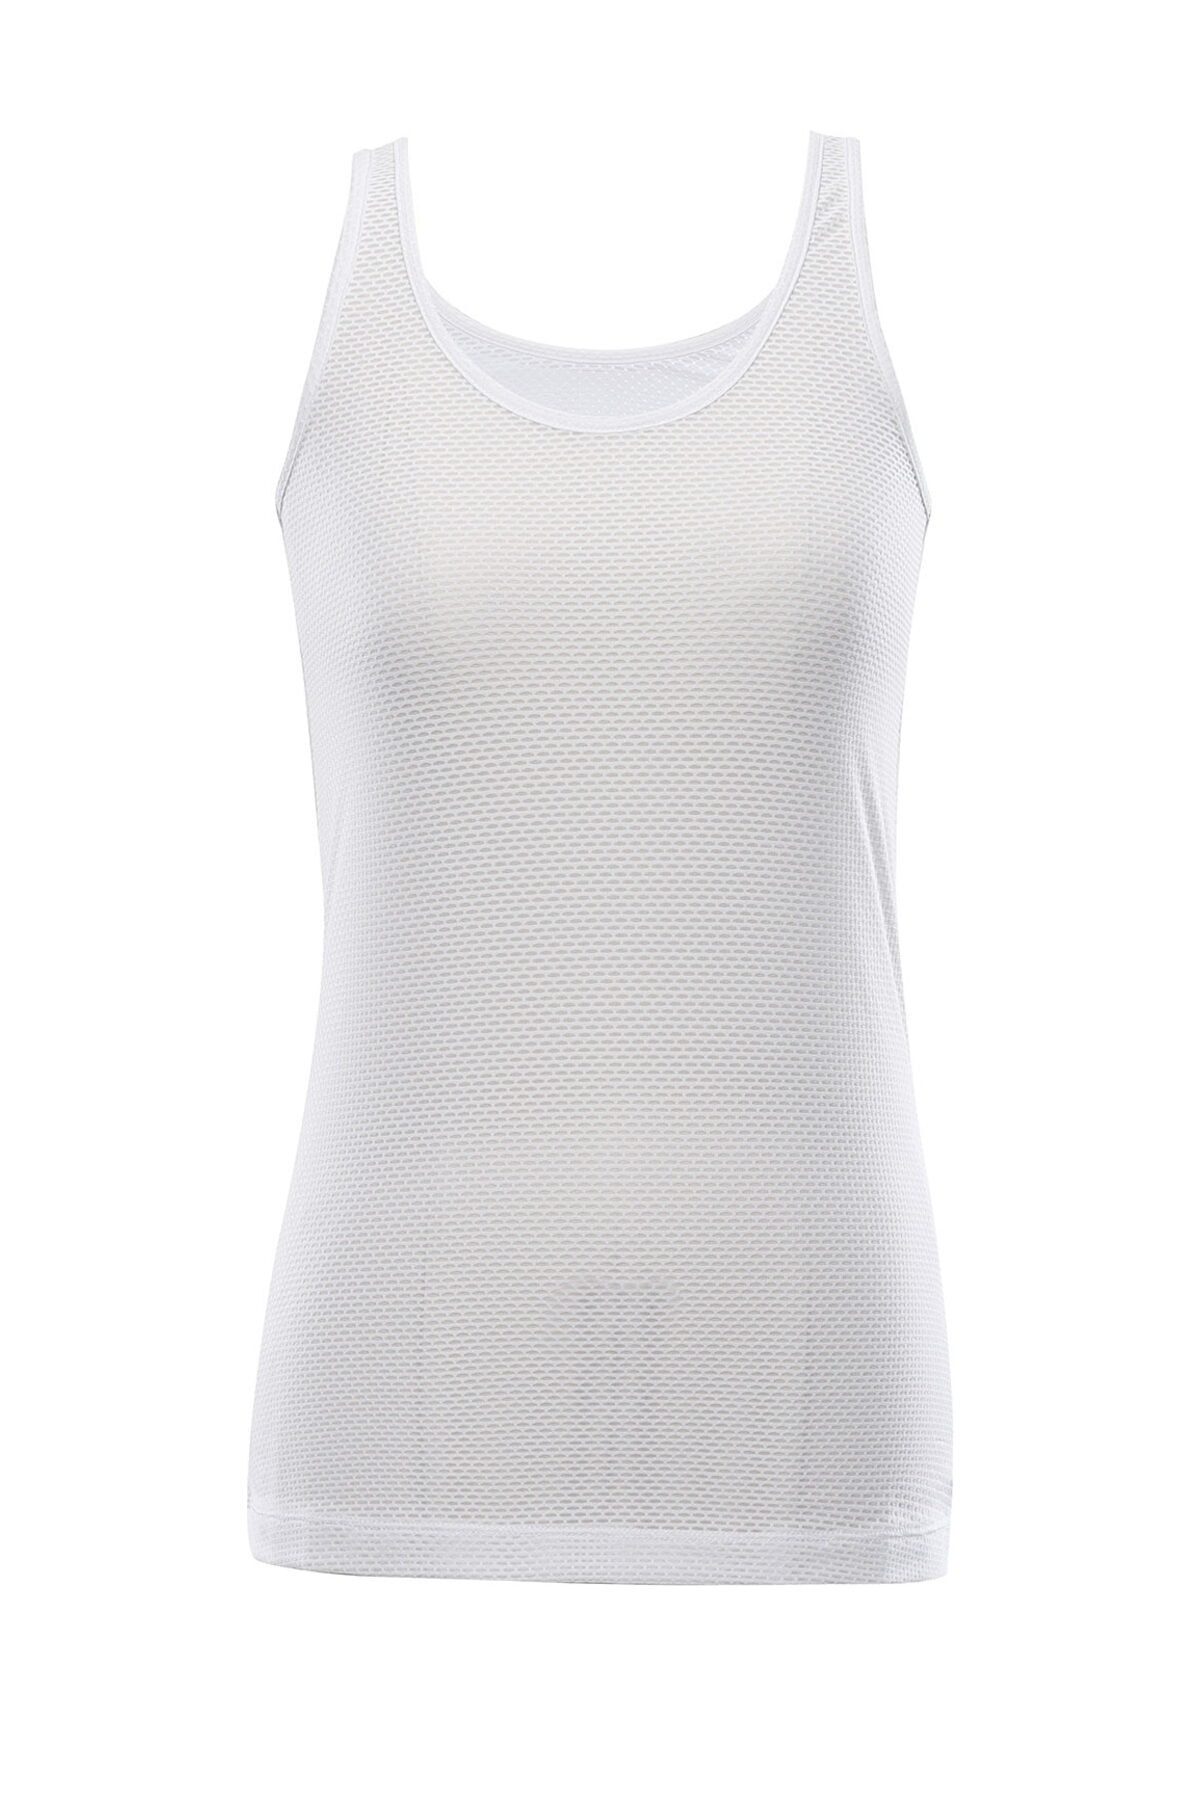 Alpine Pro T-Shirt Weiß Regular Fit Fast ausverkauft